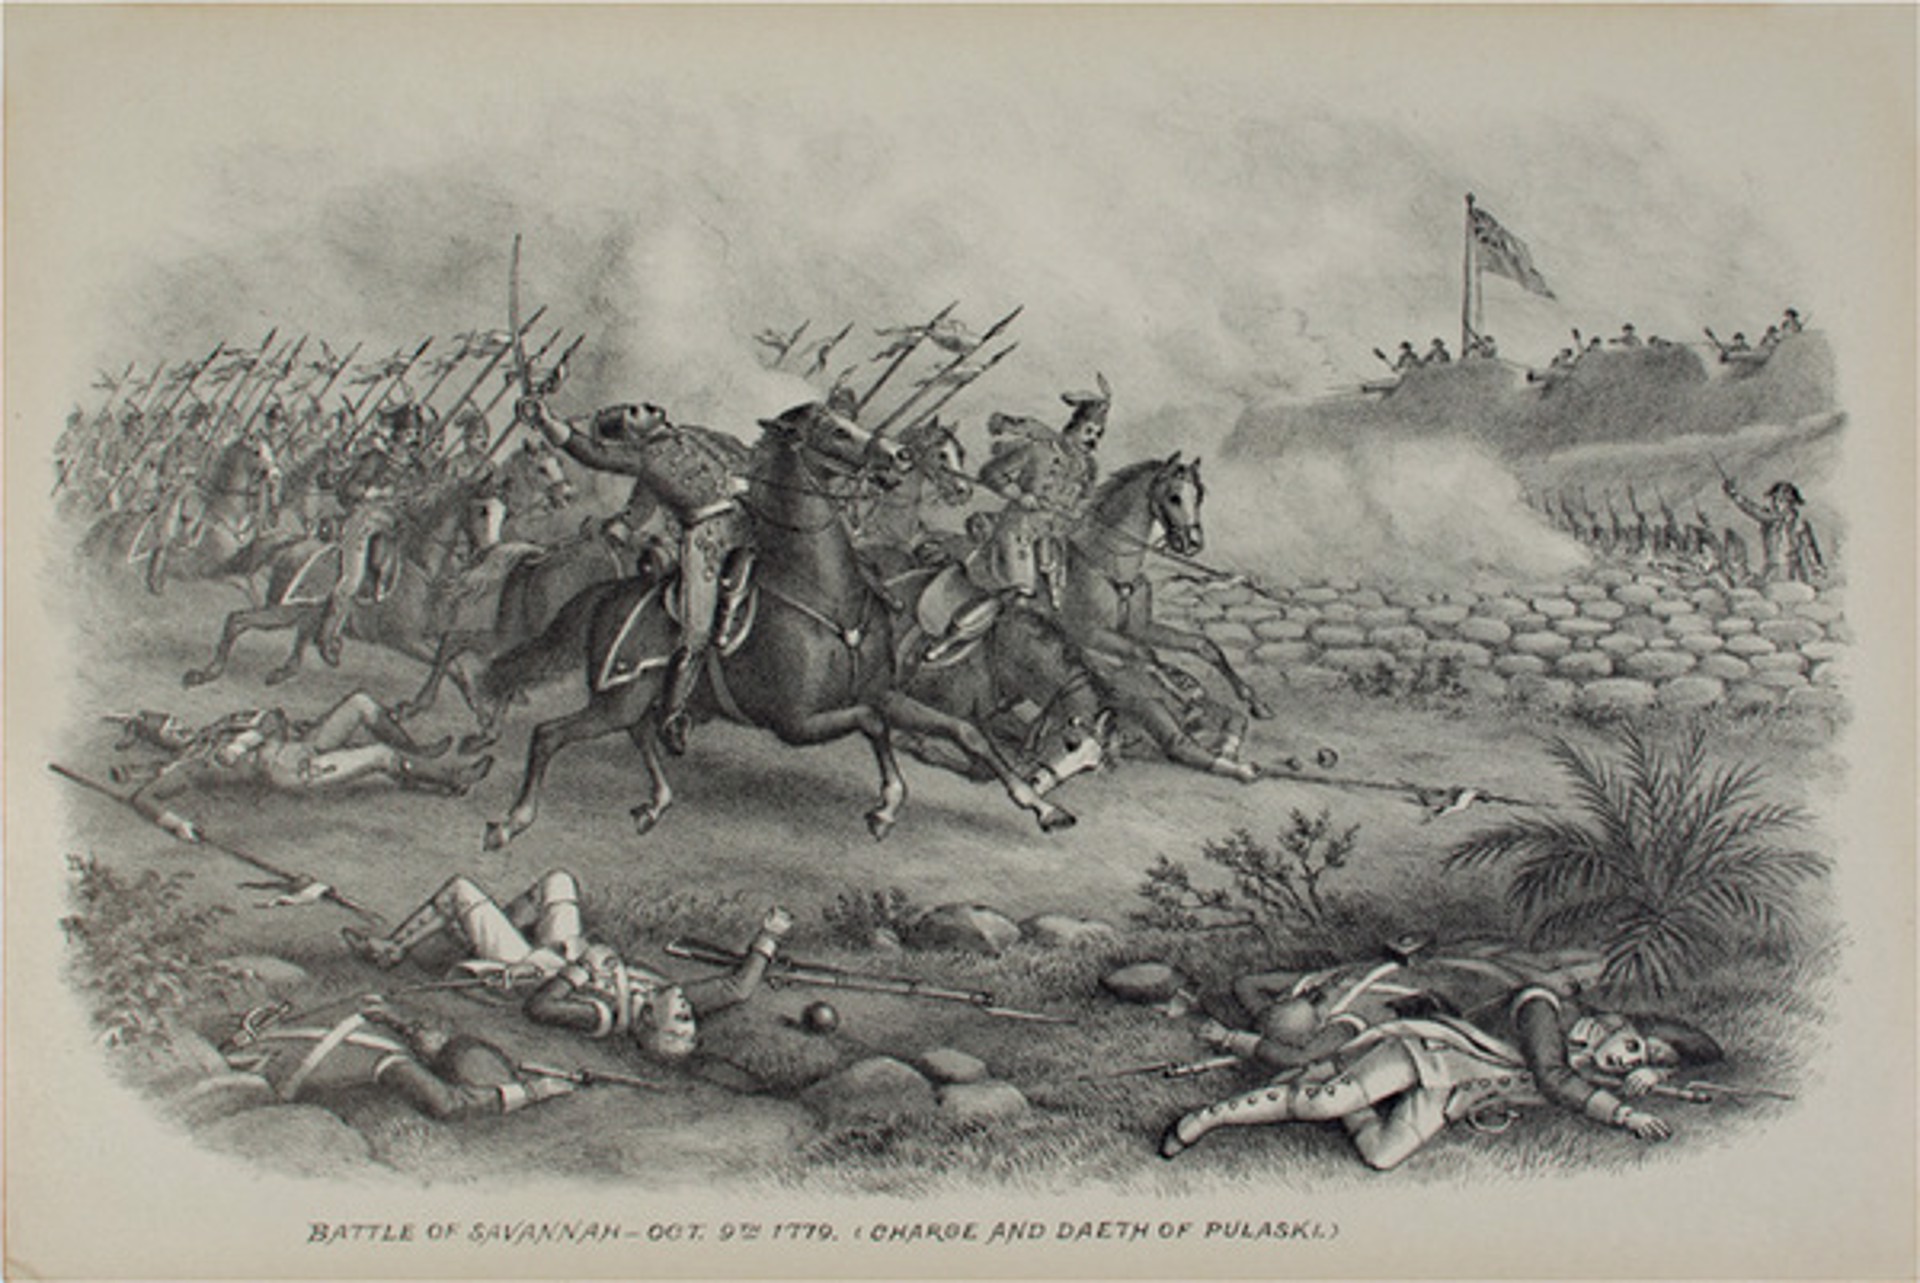 Battle of Savannah, Oct. 9th, 1779/Charge/Death Pulaski by Kurz & Allison